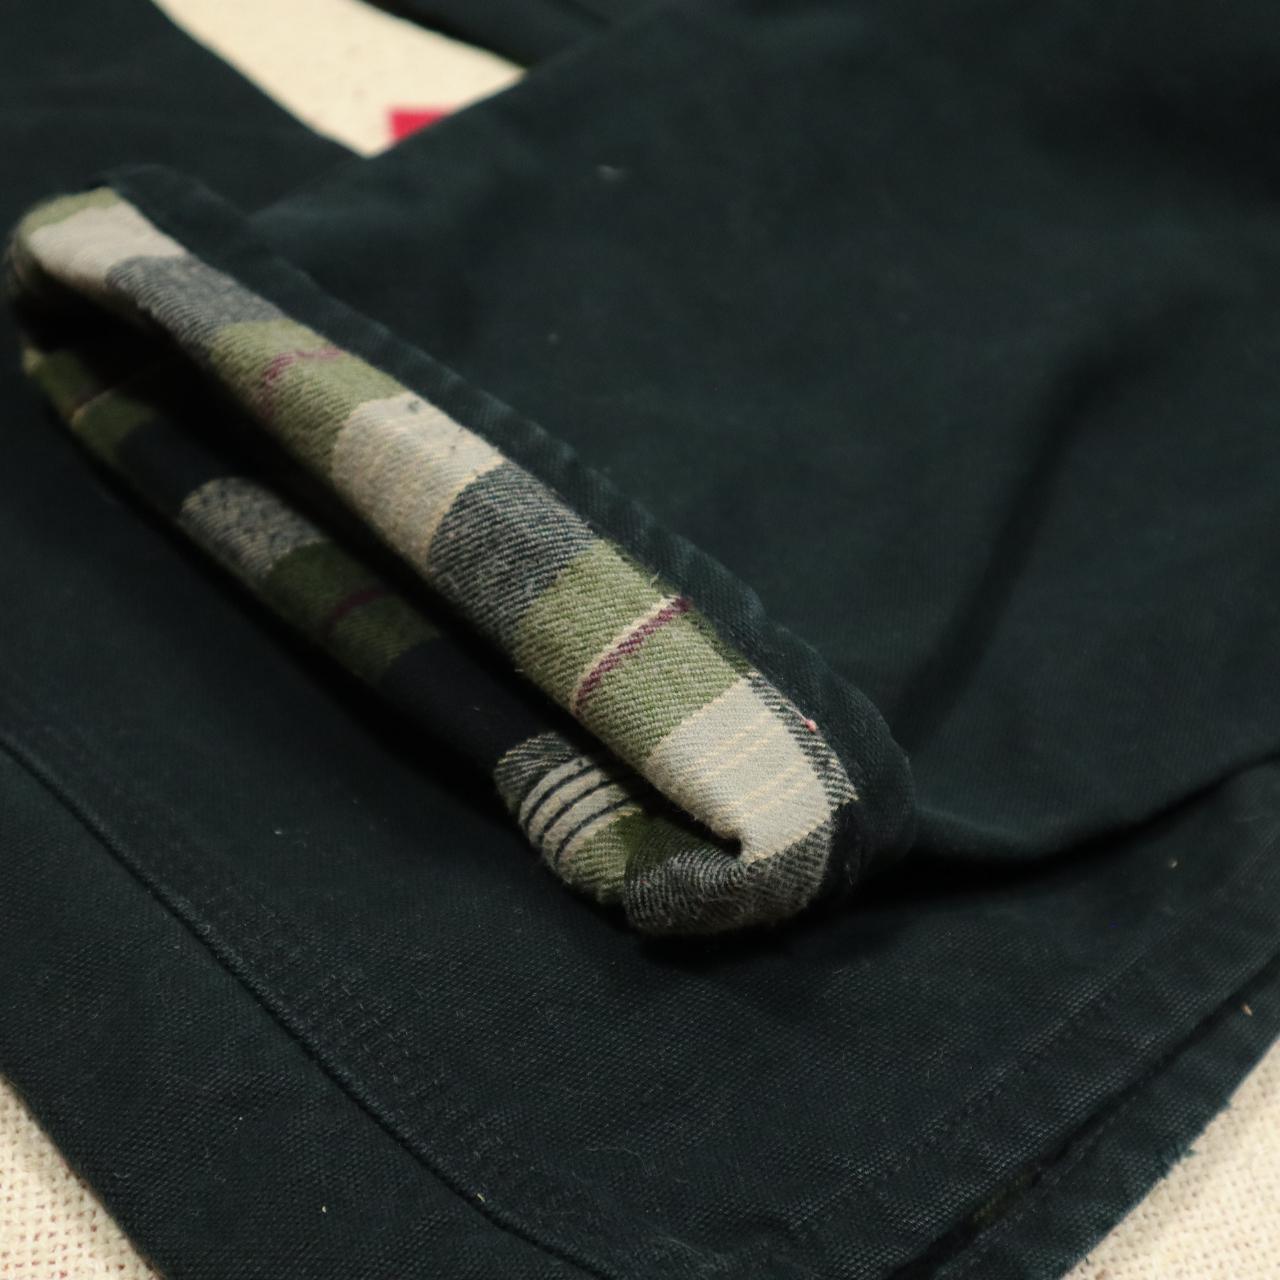 Product Image 3 - Vintage Carhartt Jeans

Size 34x34

Waist: 34"
Length: